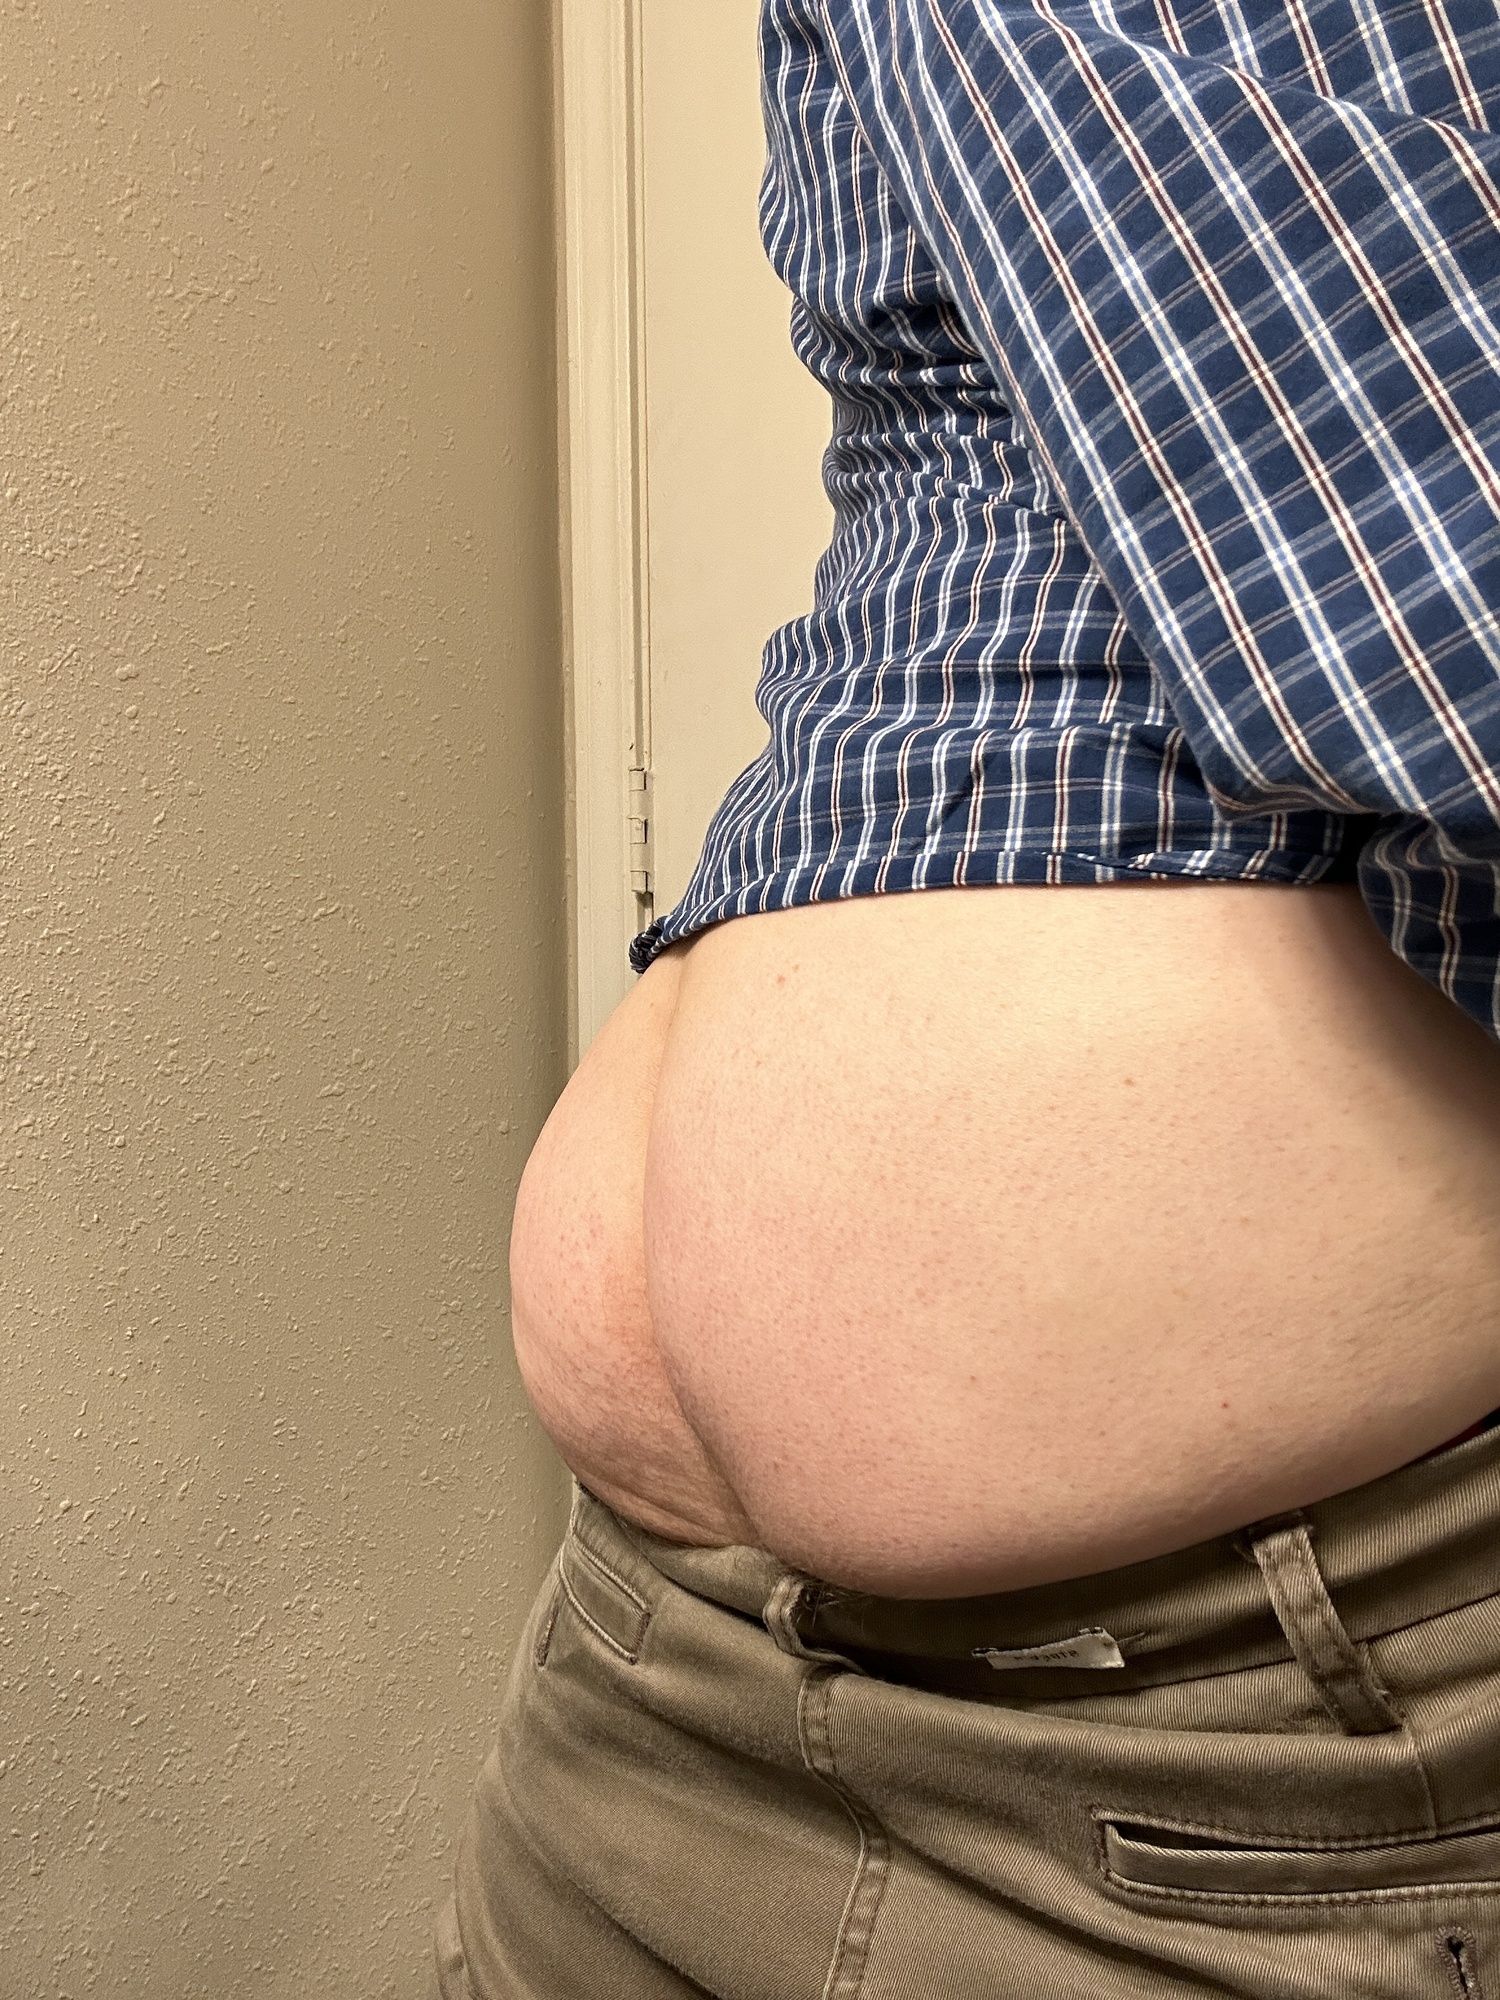 My Bubble butt #28